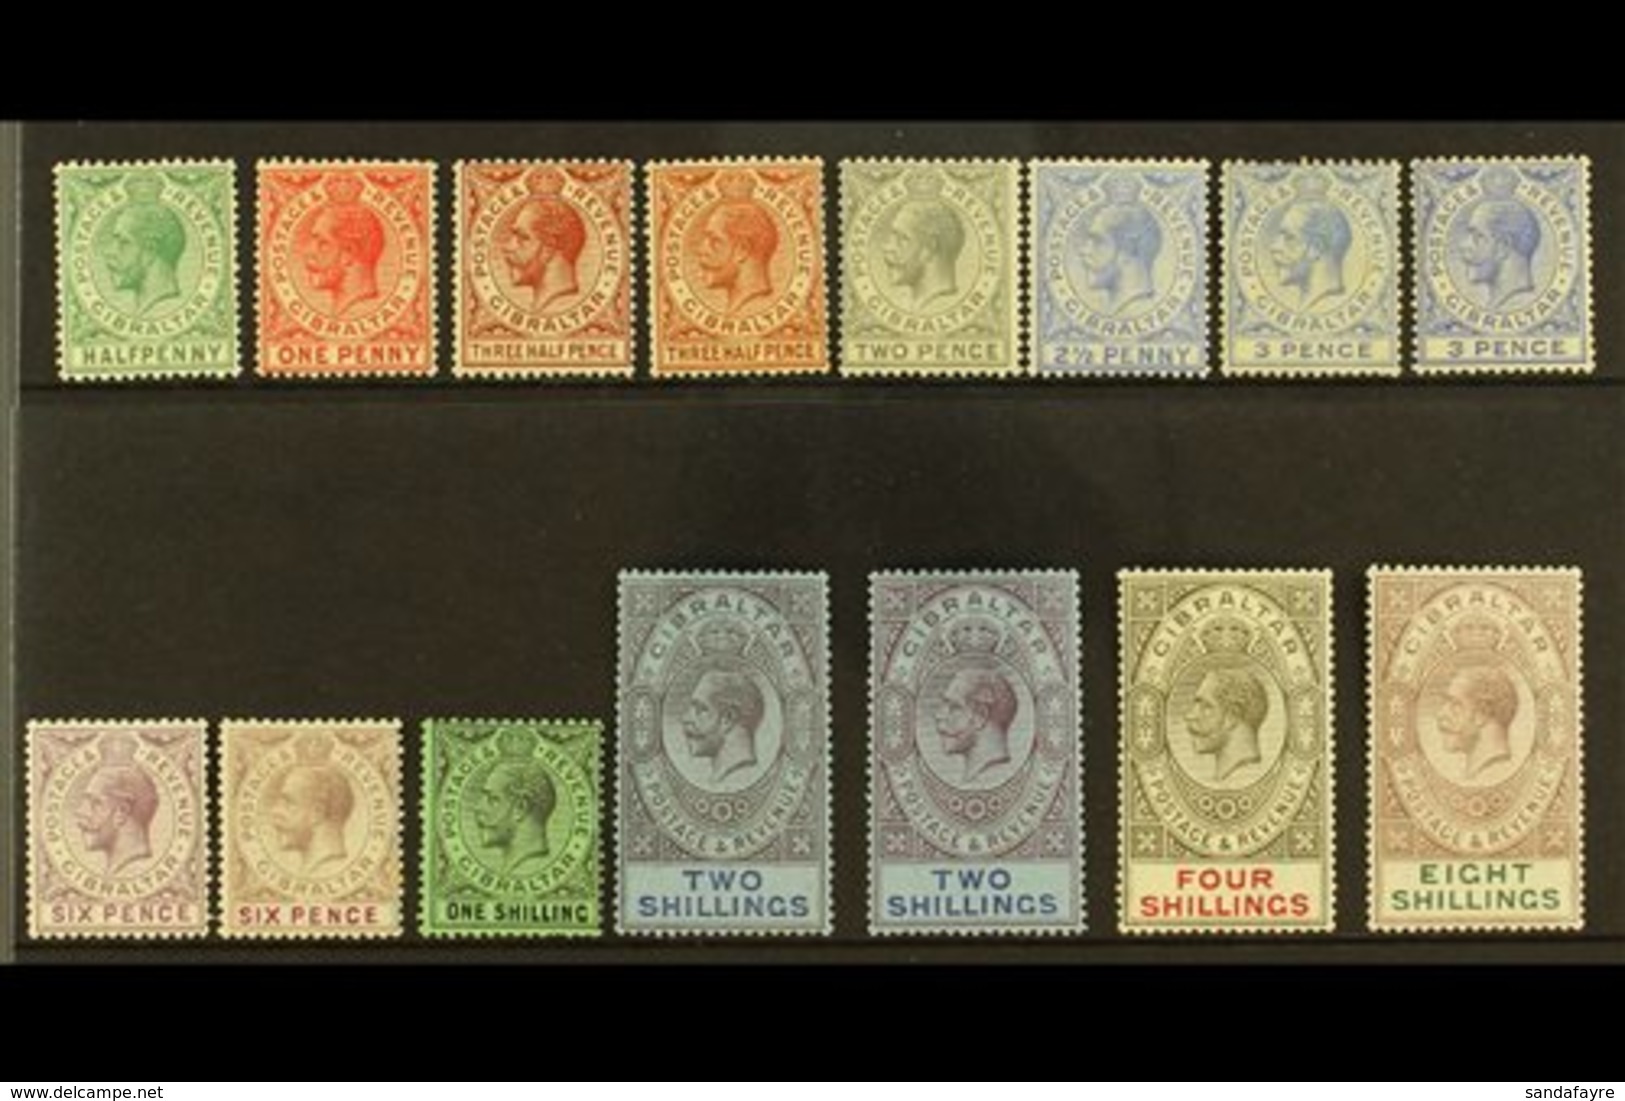 1921-27 KGV Multi Script CA Wmk Set With ALL Listed Shade Variants, SG 89/101, Fine Mint (15 Stamps) For More Images, Pl - Gibraltar